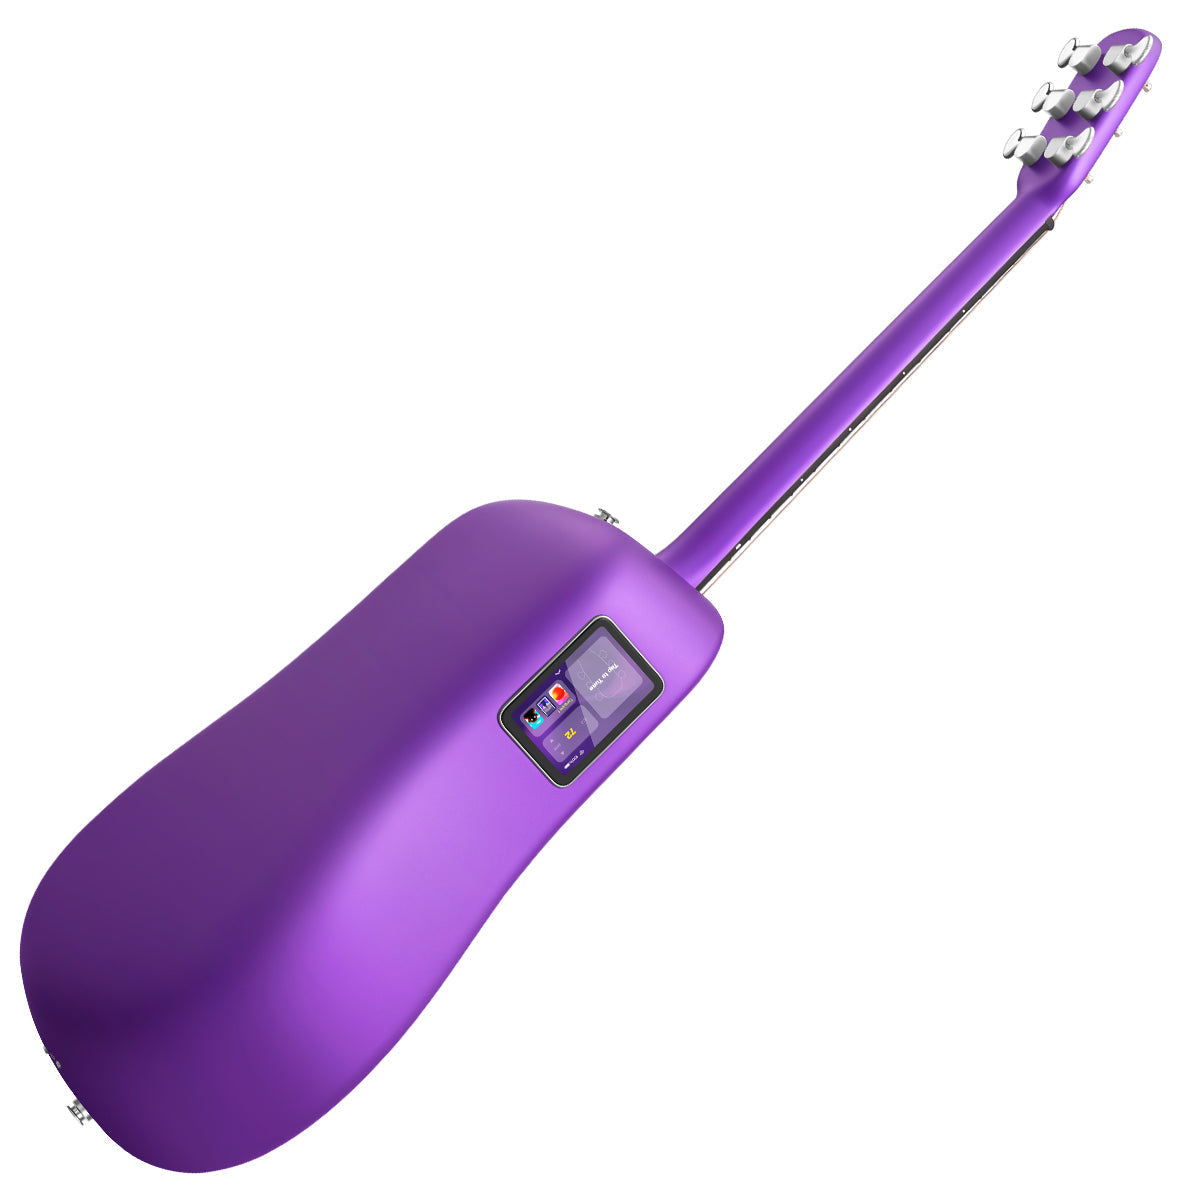 LAVA ME4 Carbon 36" with Space Bag ~ Purple, Acoustic Guitar for sale at Richards Guitars.